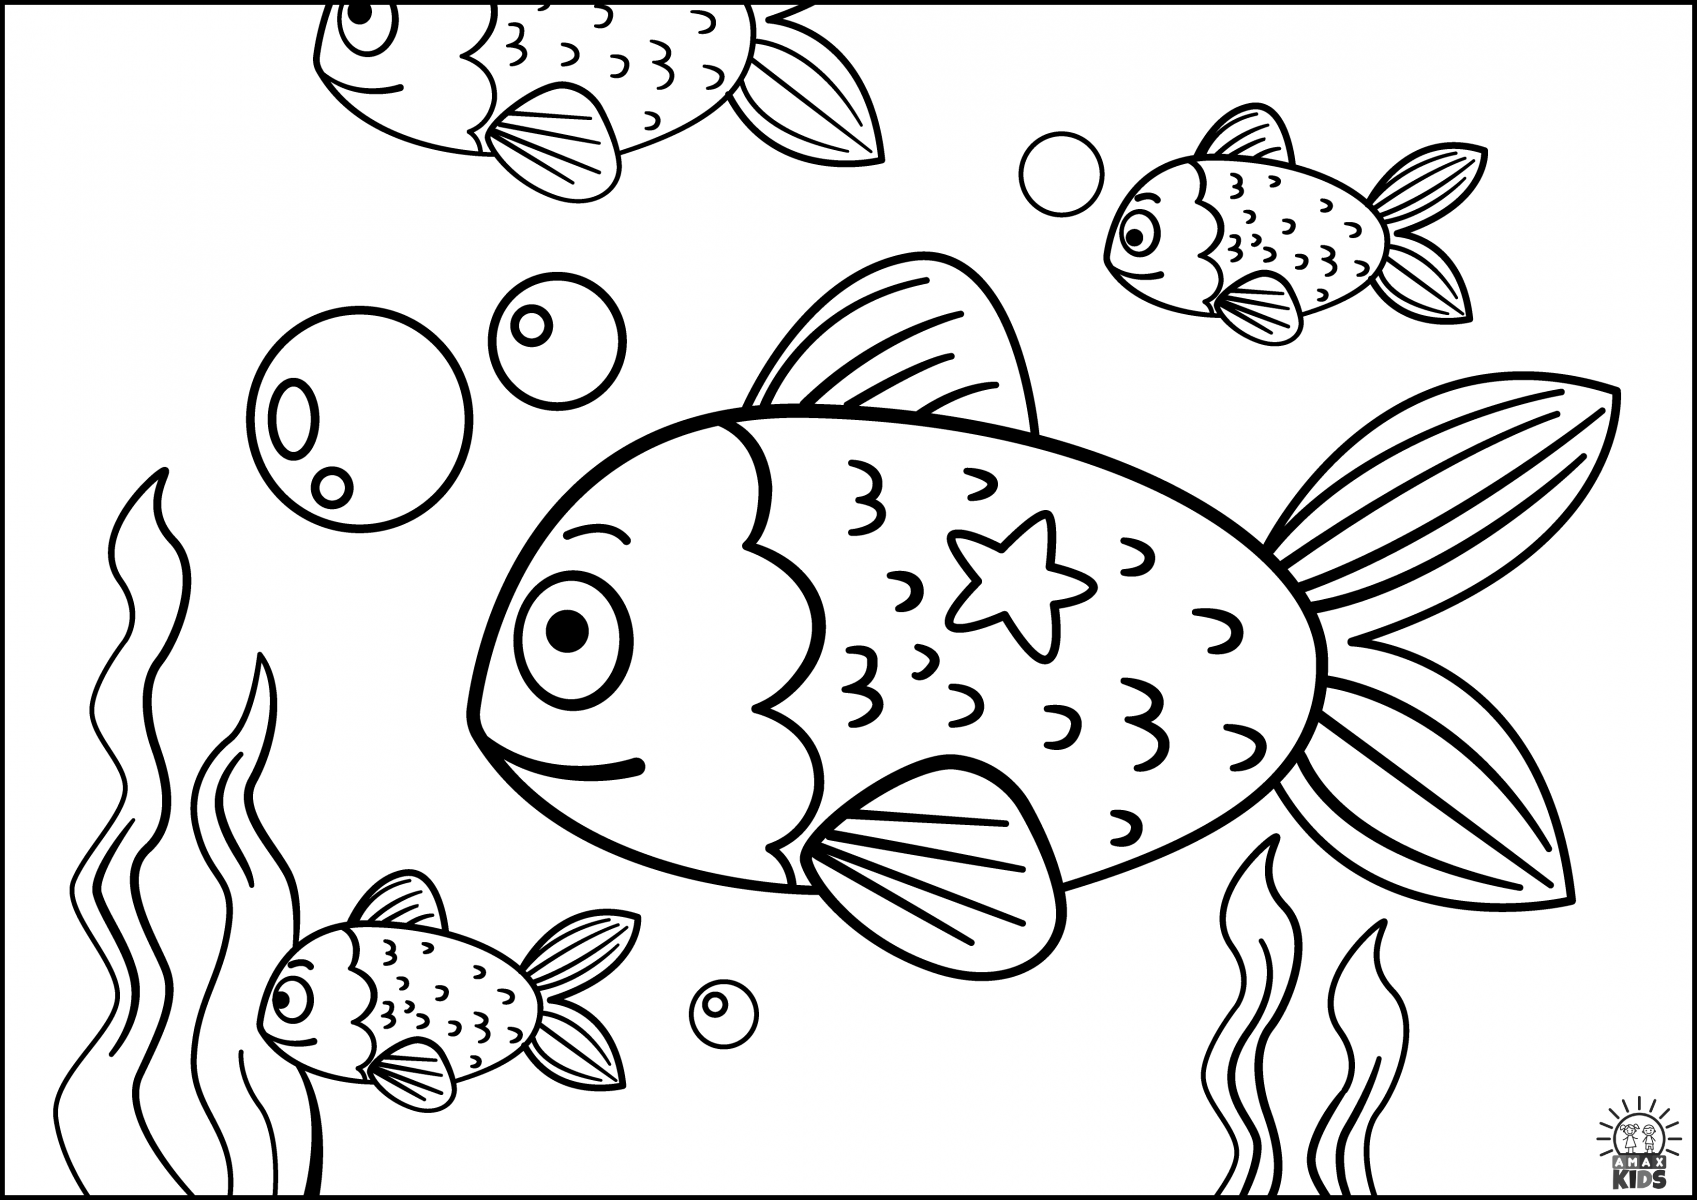 Раскраска рыбы для детей 6 лет. Раскраска рыбка. Рыбка раскраска для детей. Рыба раскраска для детей. Аквариумные рыбки раскраска.